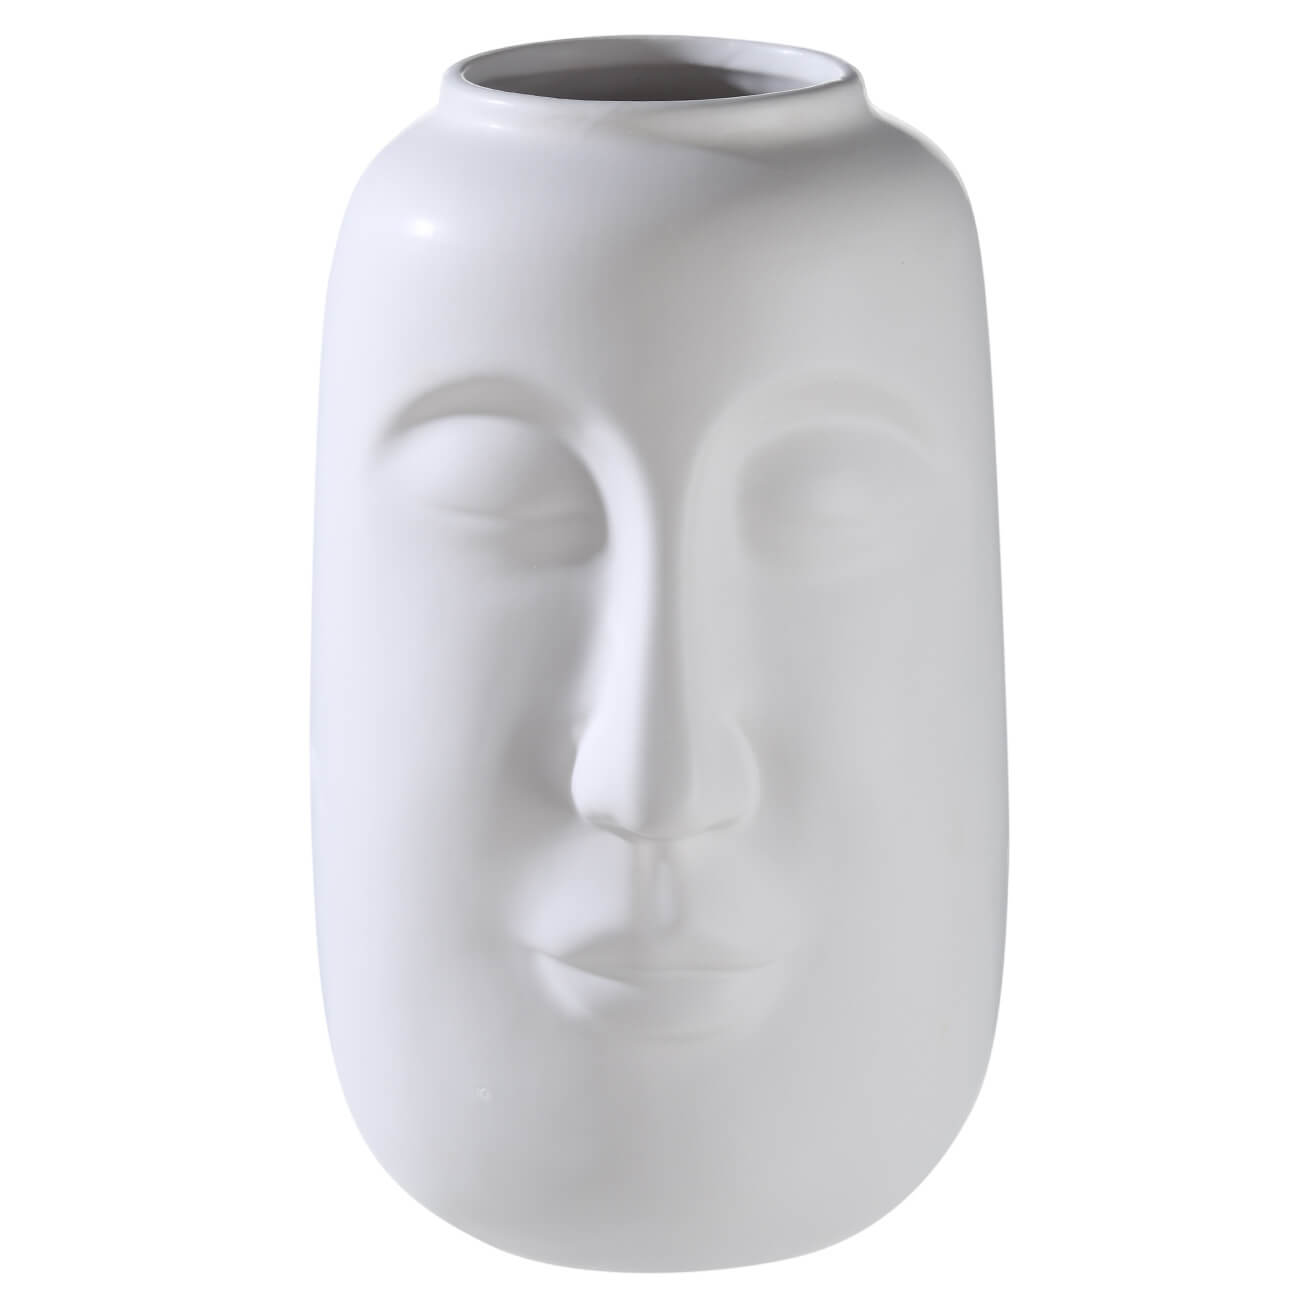 Ваза для цветов, 26 см, декоративная, керамика, белая, Лицо, Face ваза для ов 26 см декоративная керамика белая лицо face